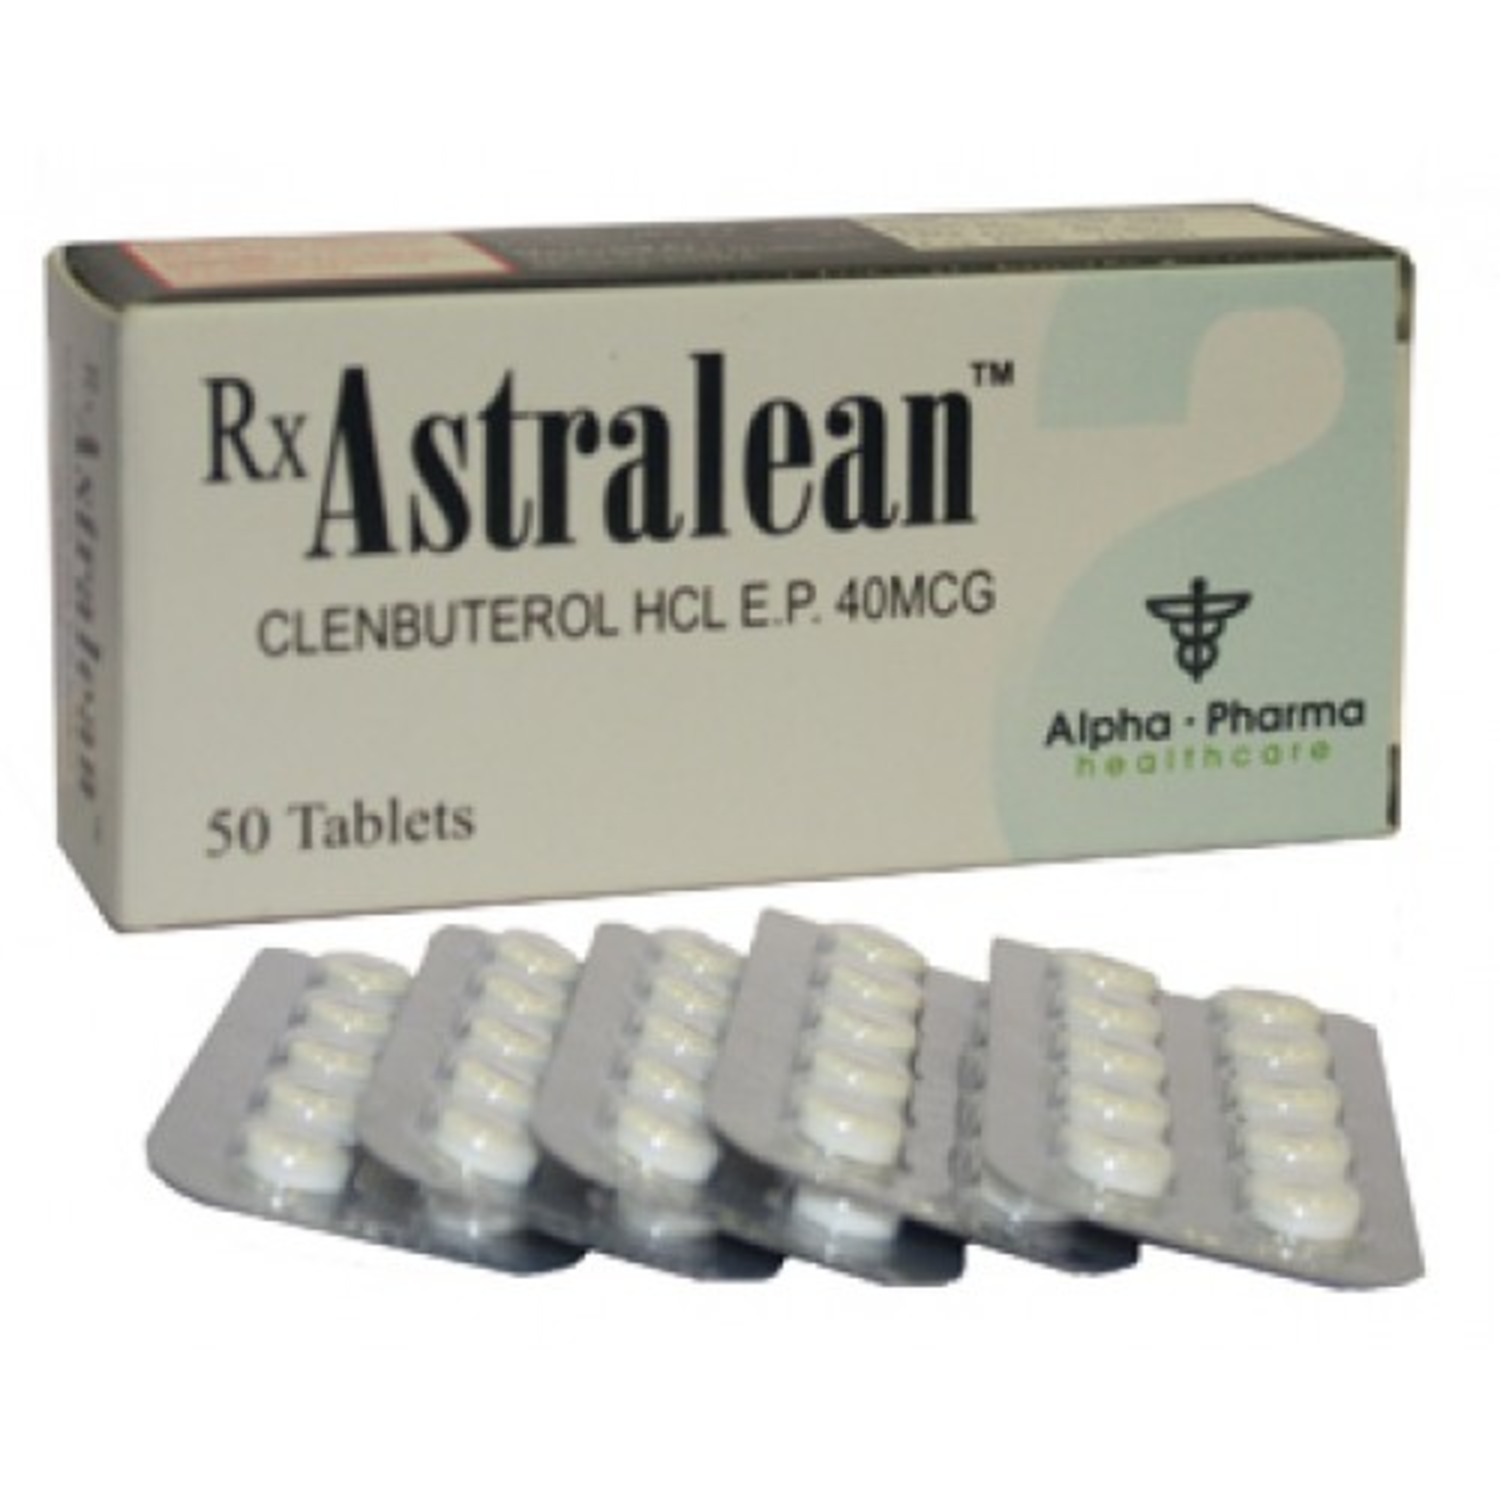 Astralean Clenbuterol 40mcg Tablets